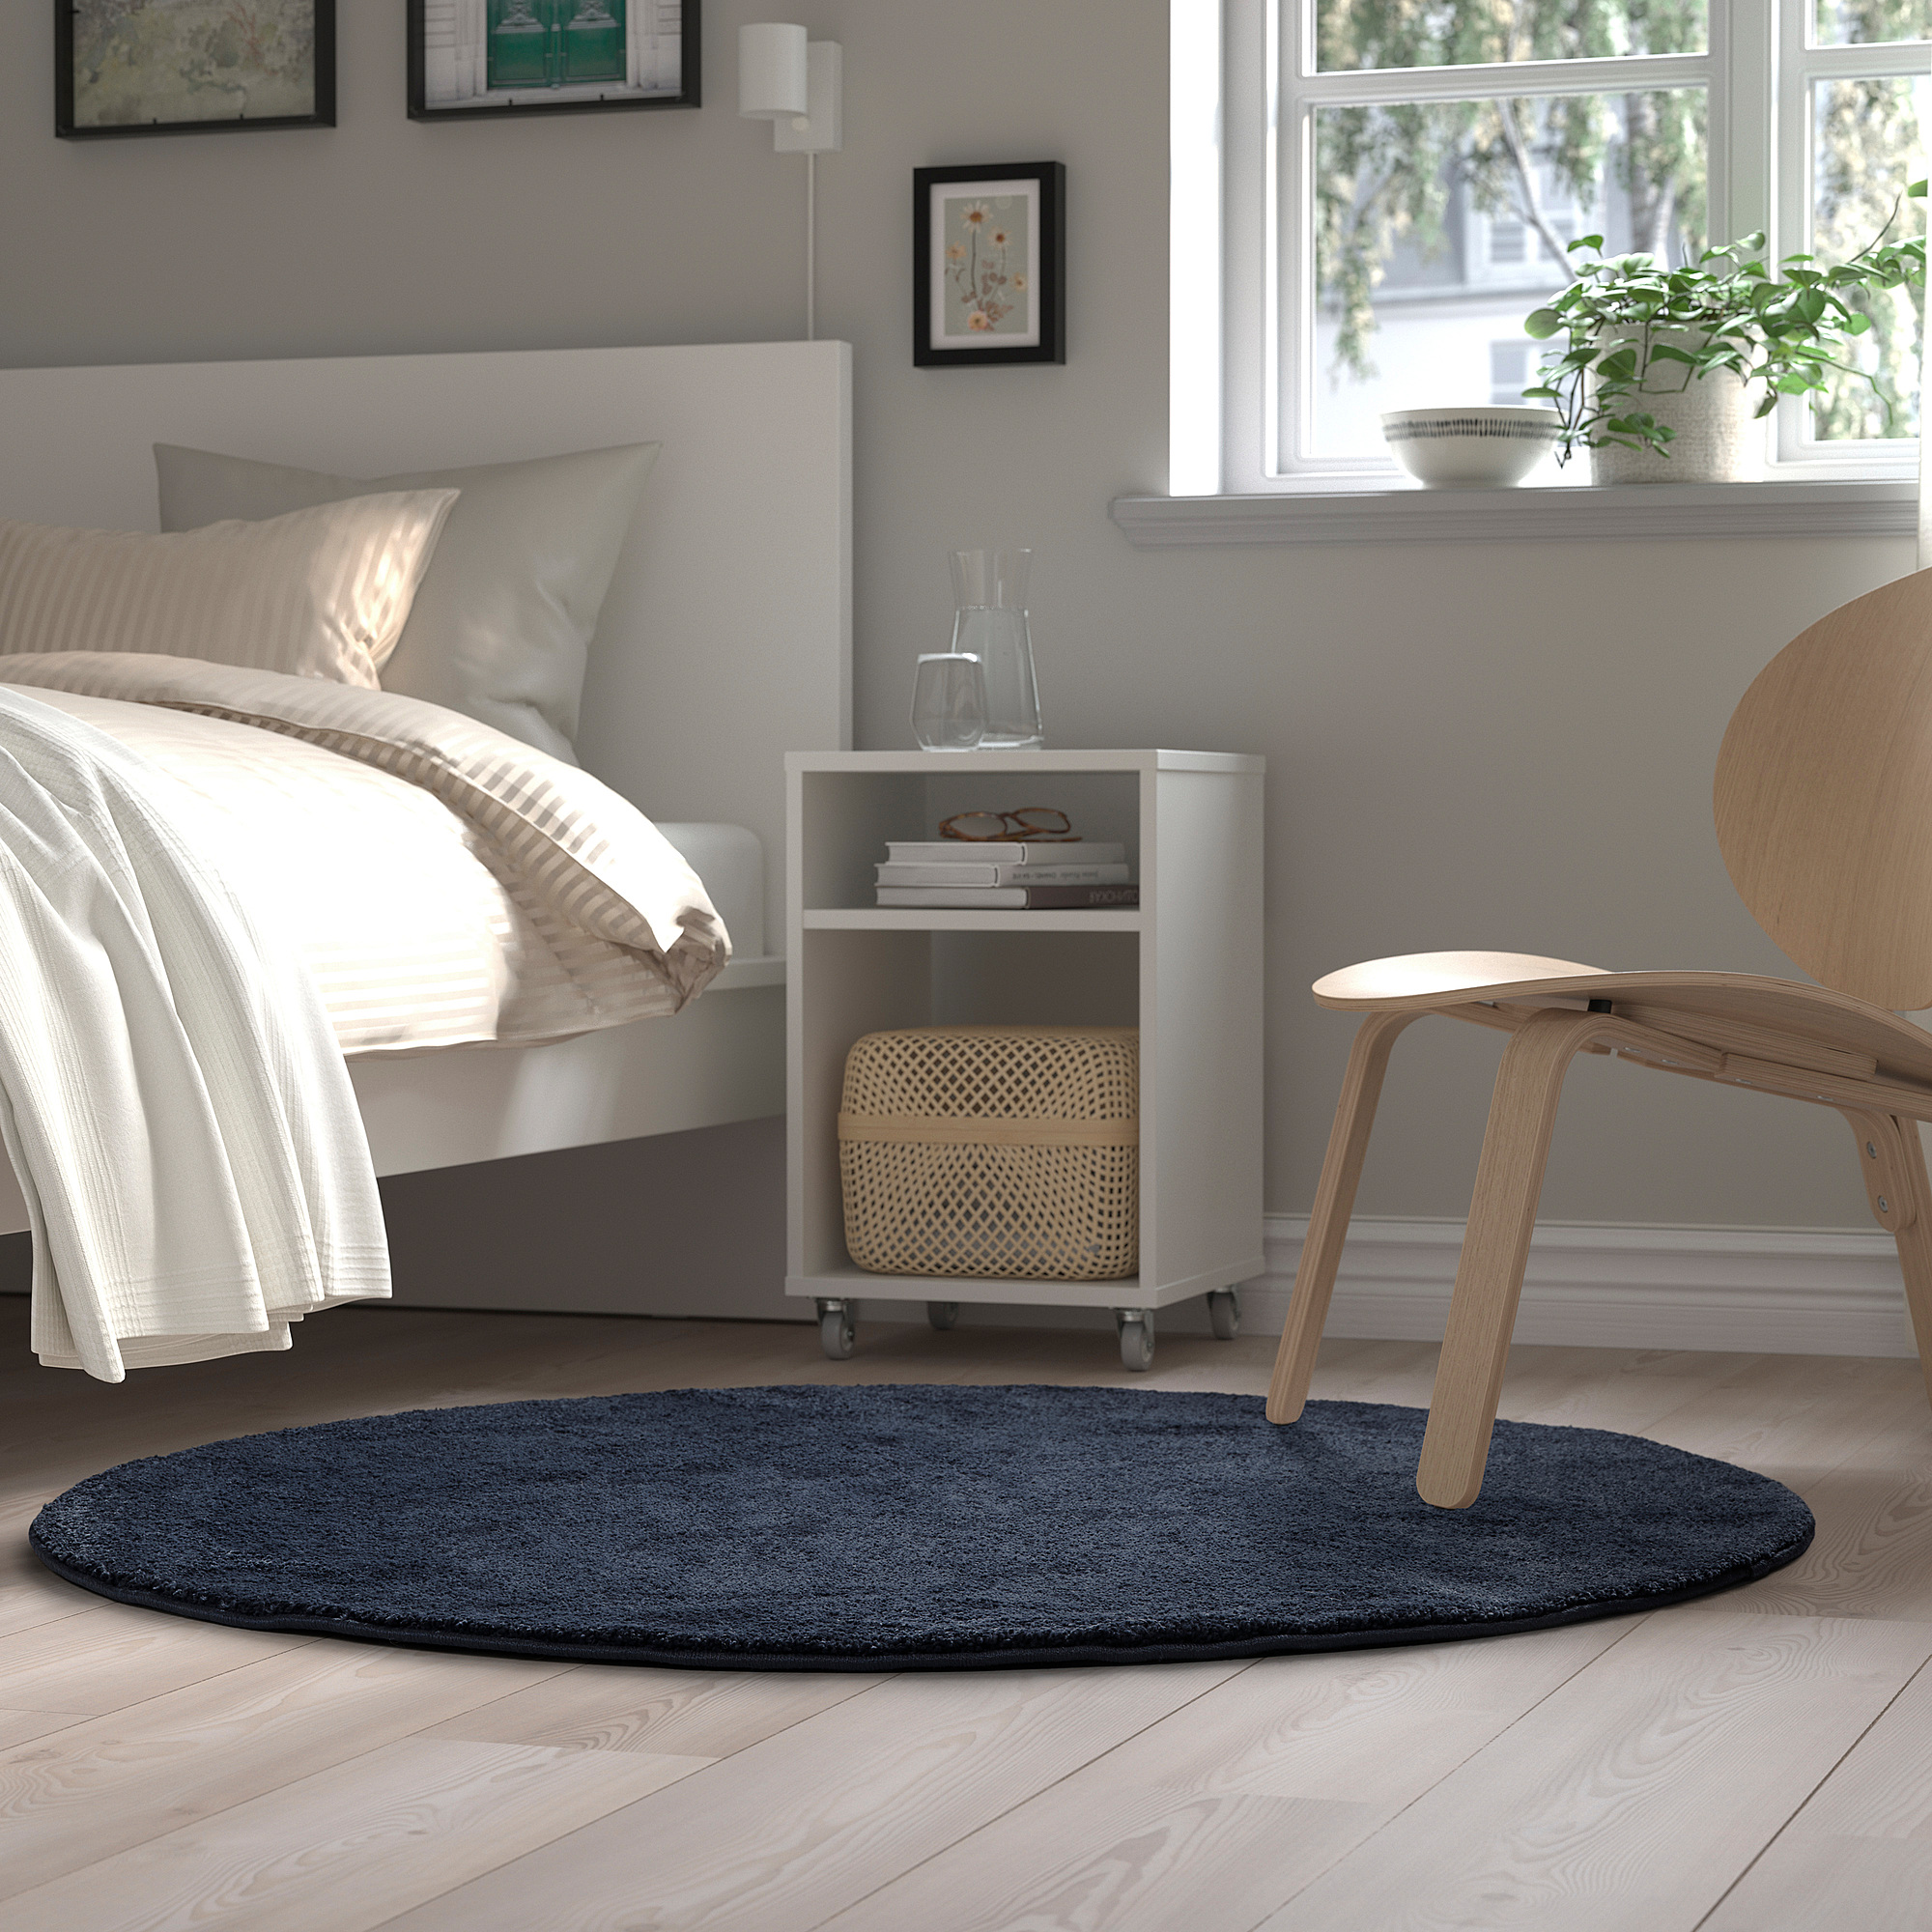 STOENSE off-white, Rug, low pile, 200x300 cm - IKEA